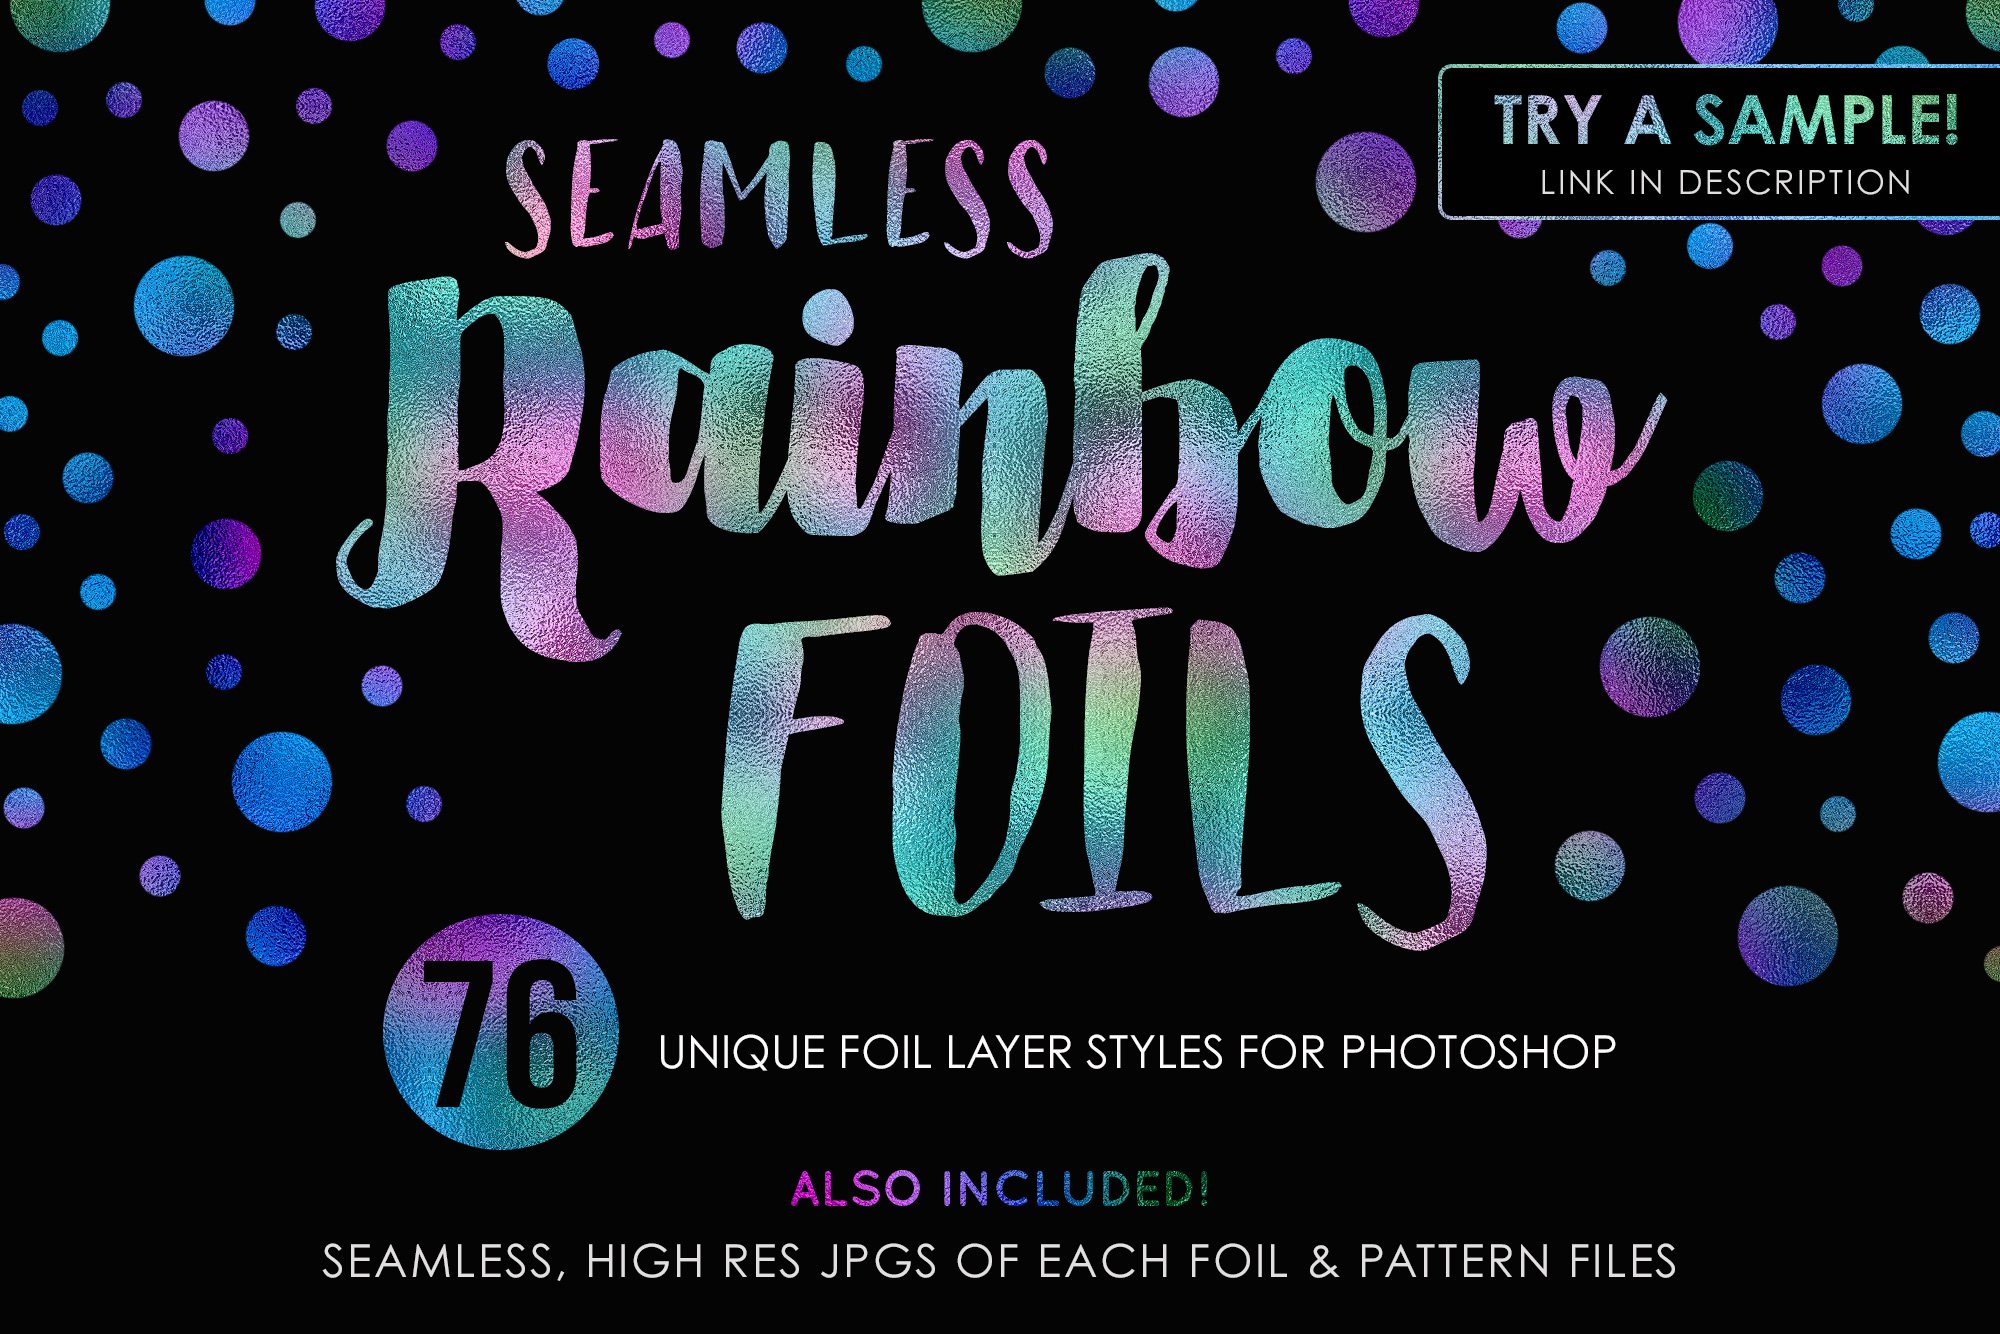 76 Seamless Rainbow Foilscover image.